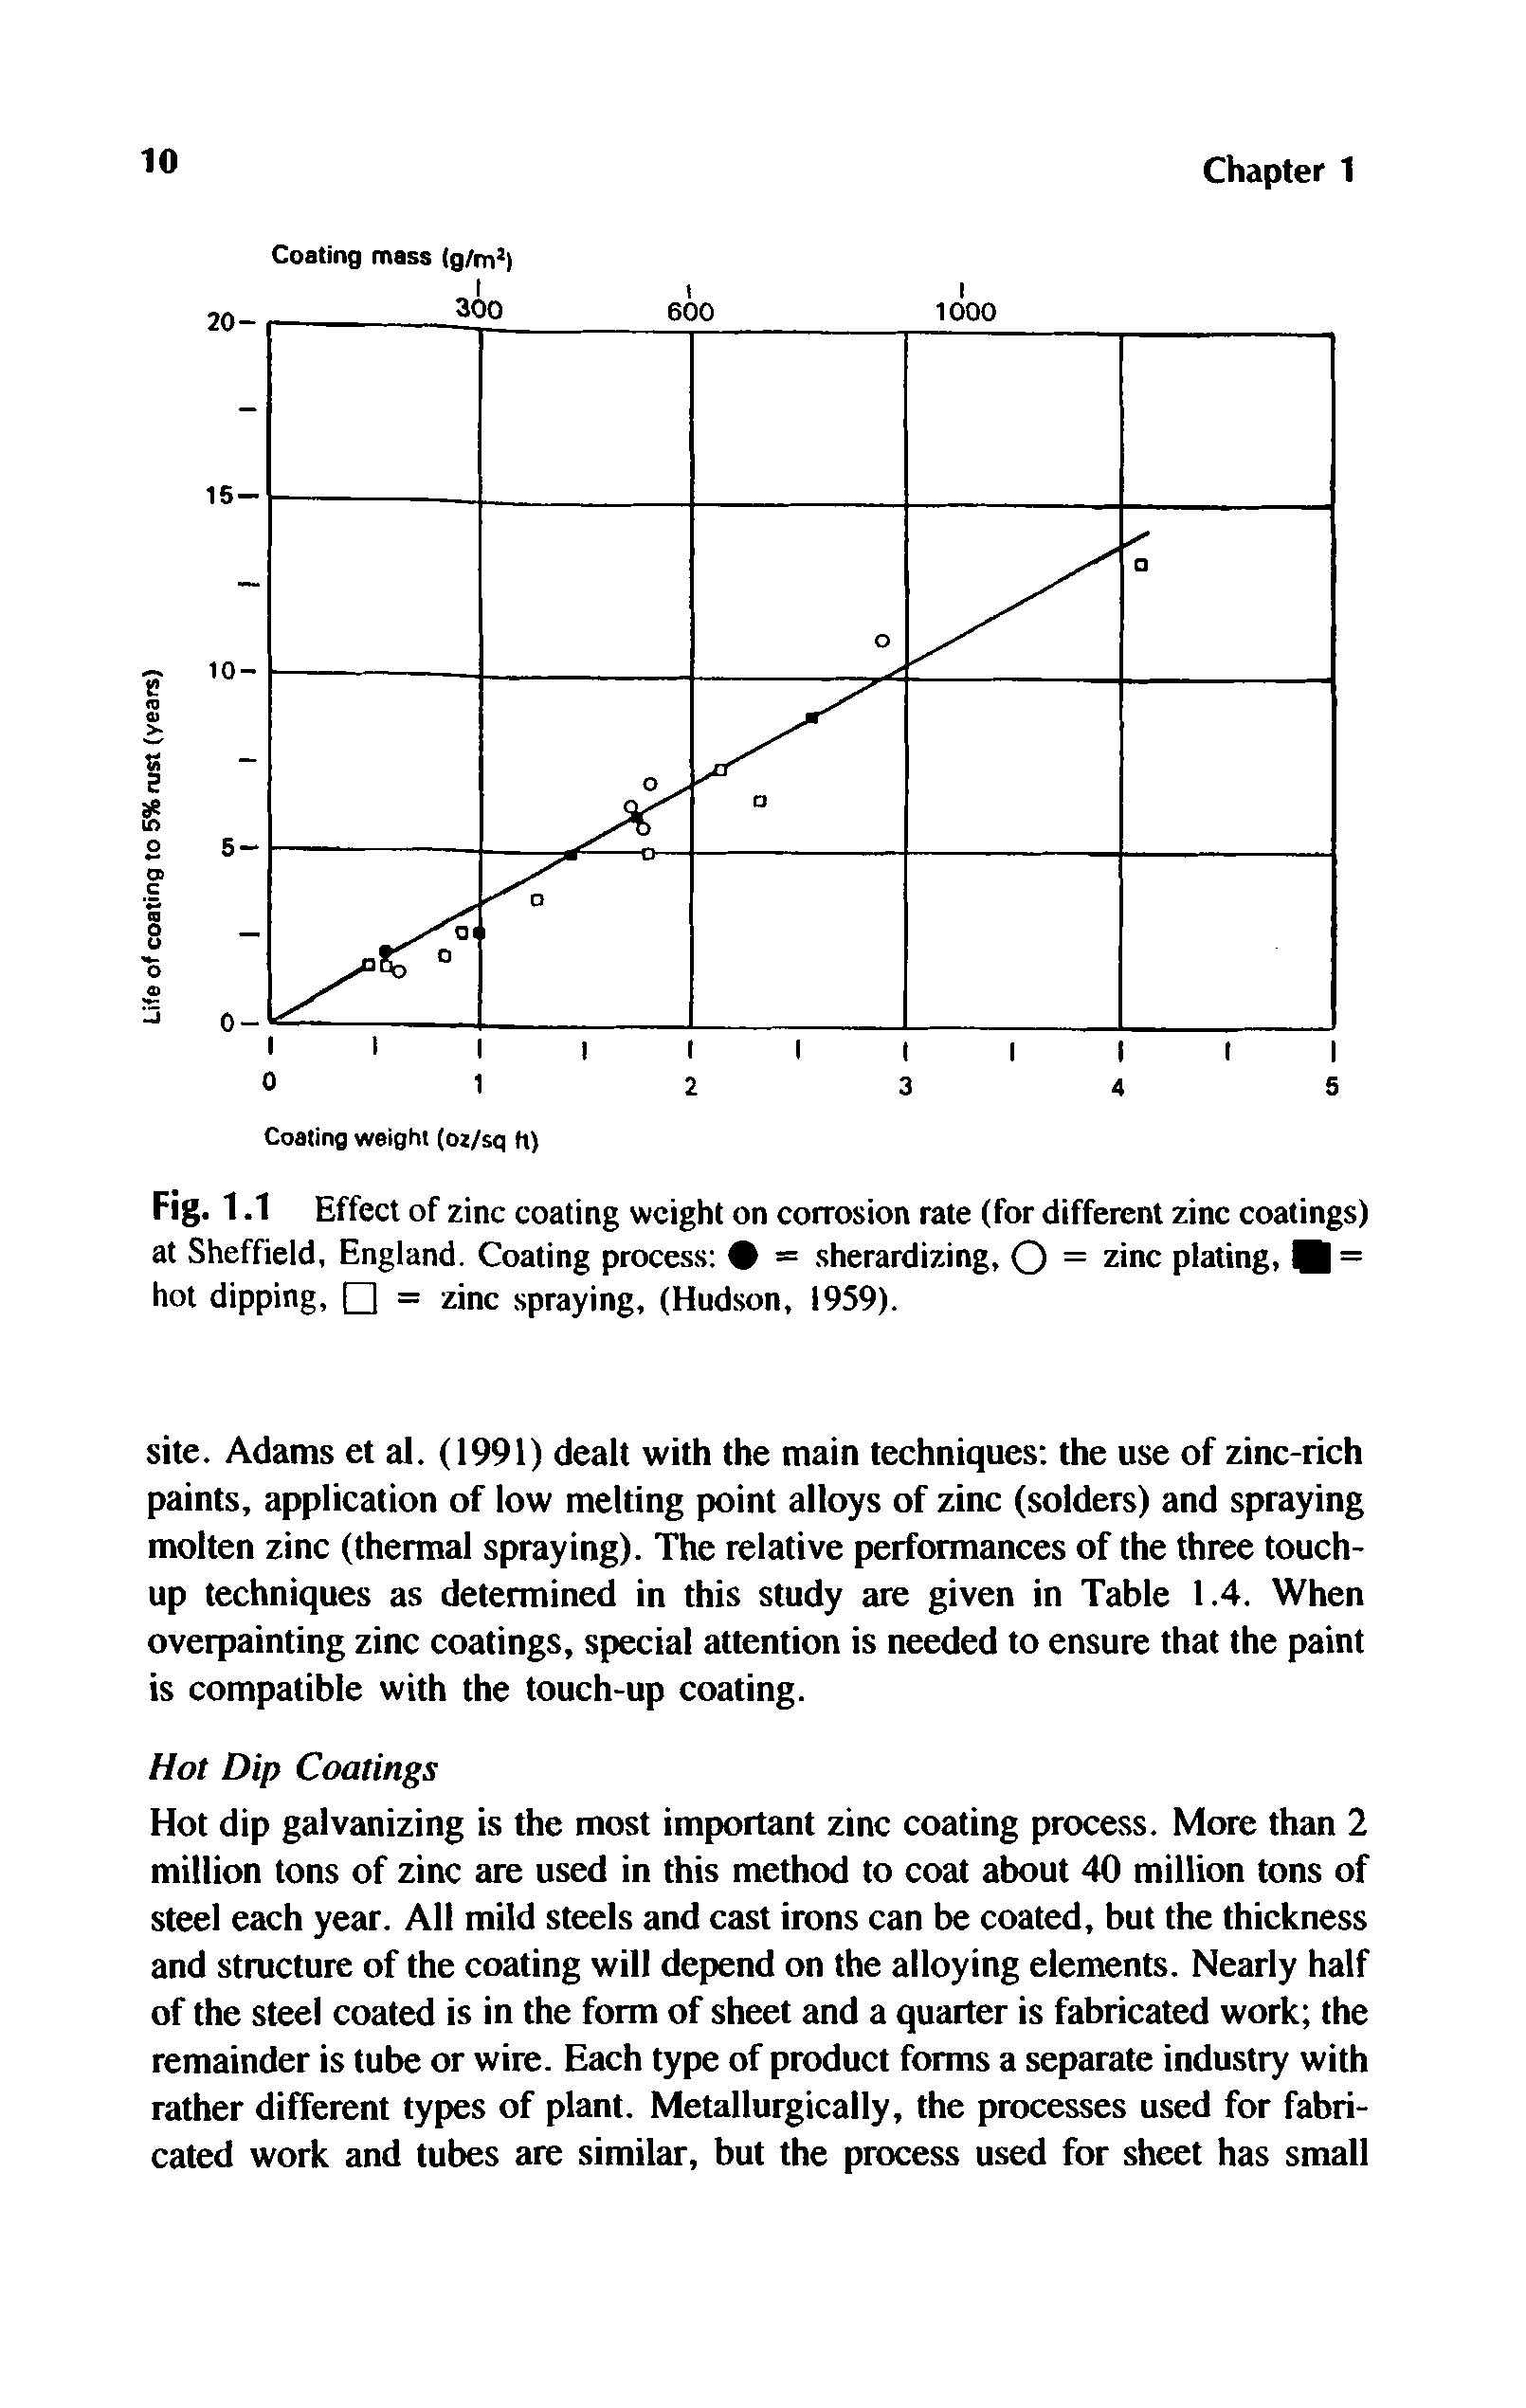 Fig. 1.1 Effect of zinc coating weight on corrosion rate (for different zinc coatings) at Sheffield, England. Coating process = sherardizing, O = zinc plating, B = hot dipping, = zinc spraying, (Hudson, 1959).